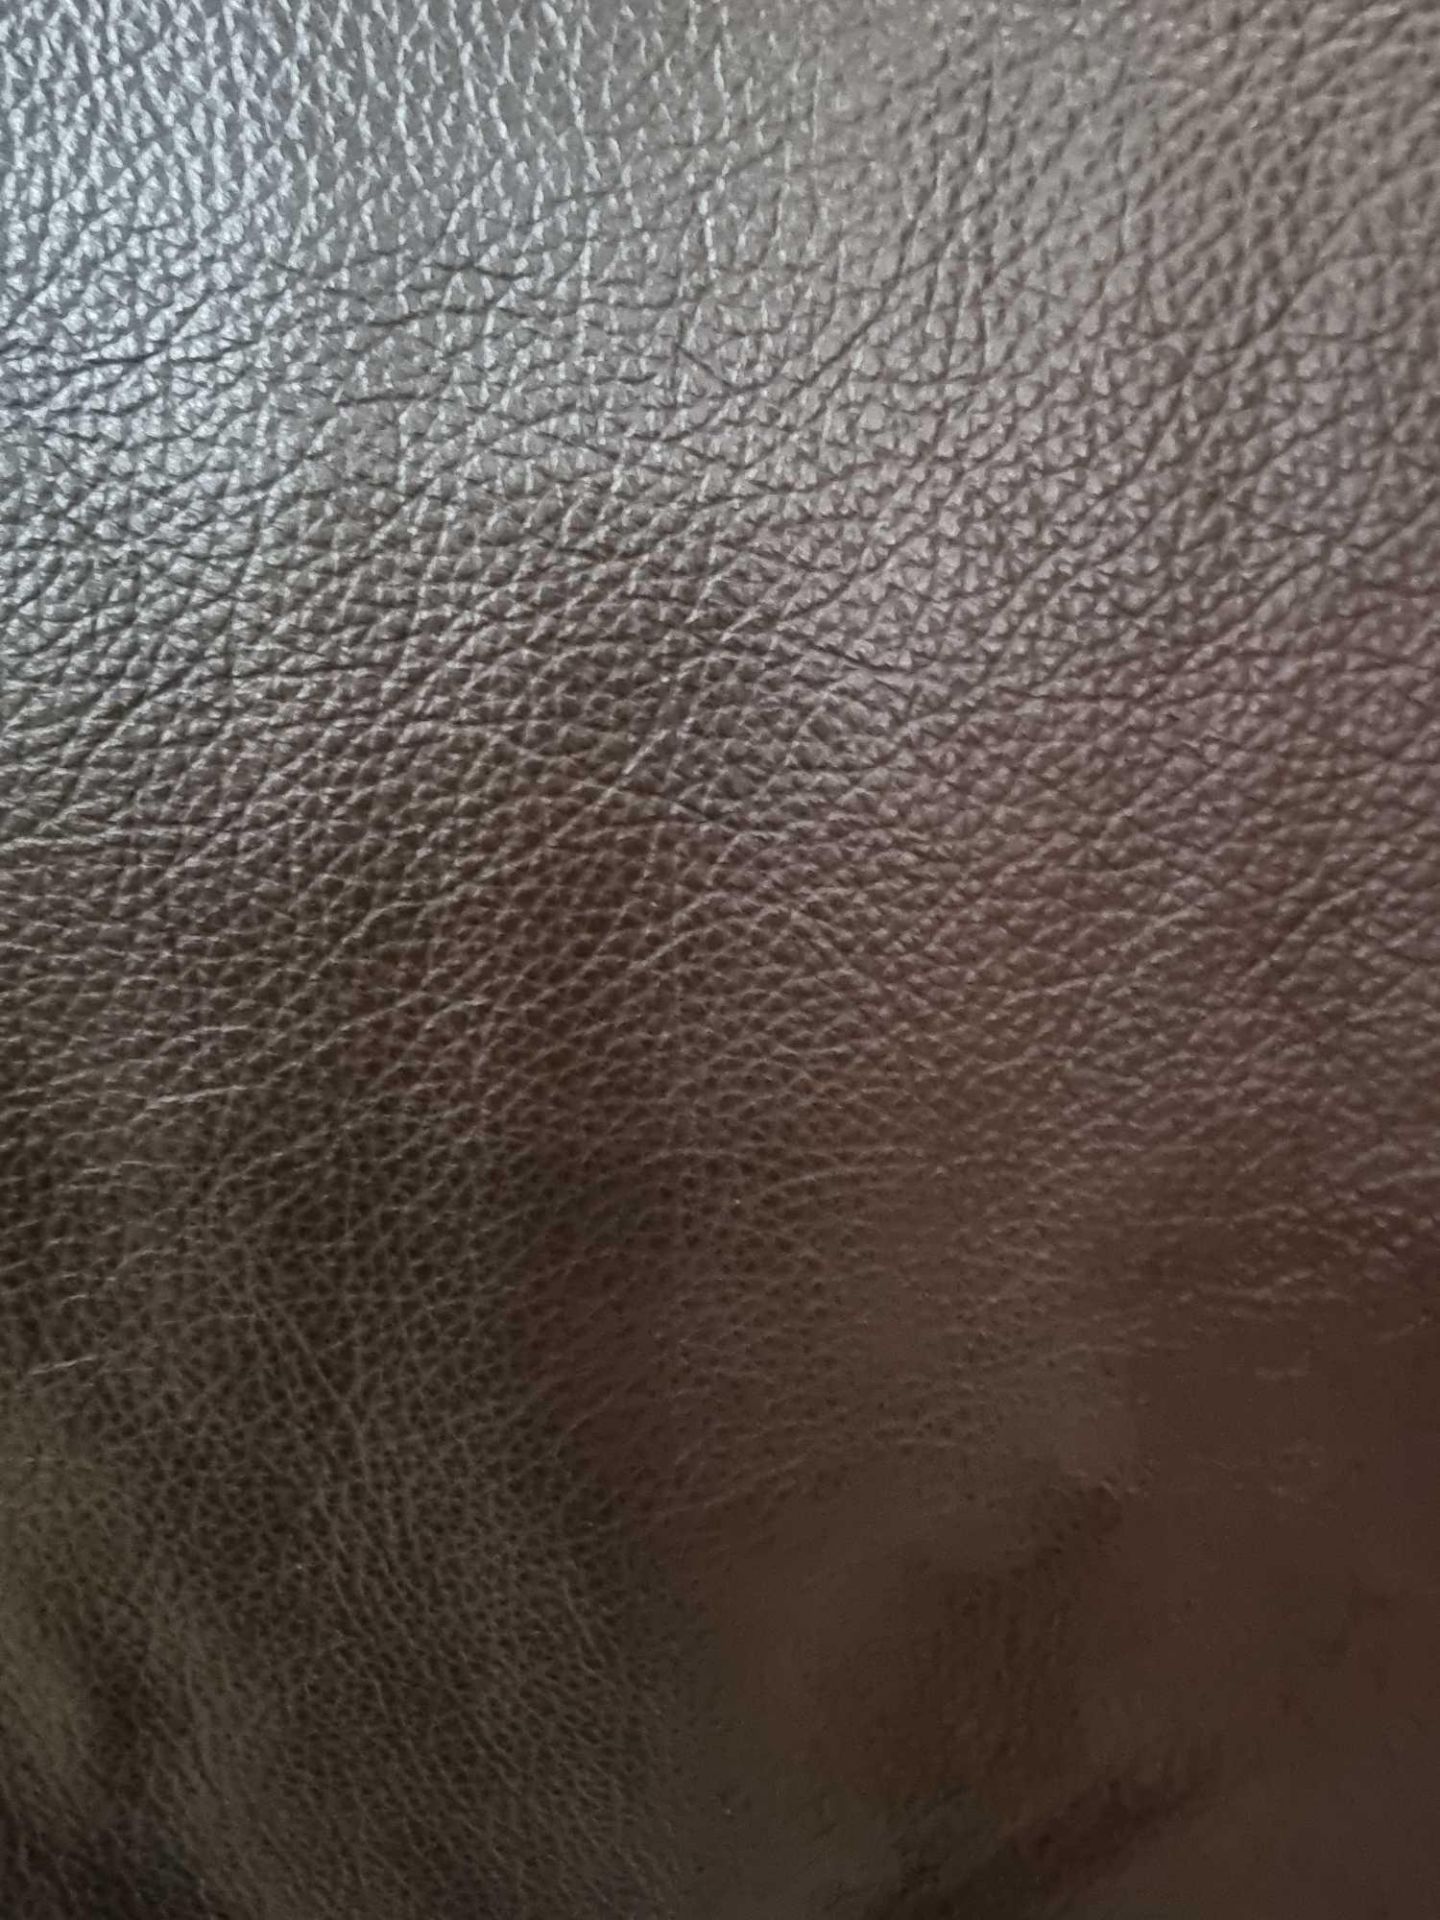 Mastrotto Dakota Chocolate Leather Hide approximately 3 8M2 2 x 1 9cm ( Hide No,106) - Bild 2 aus 3